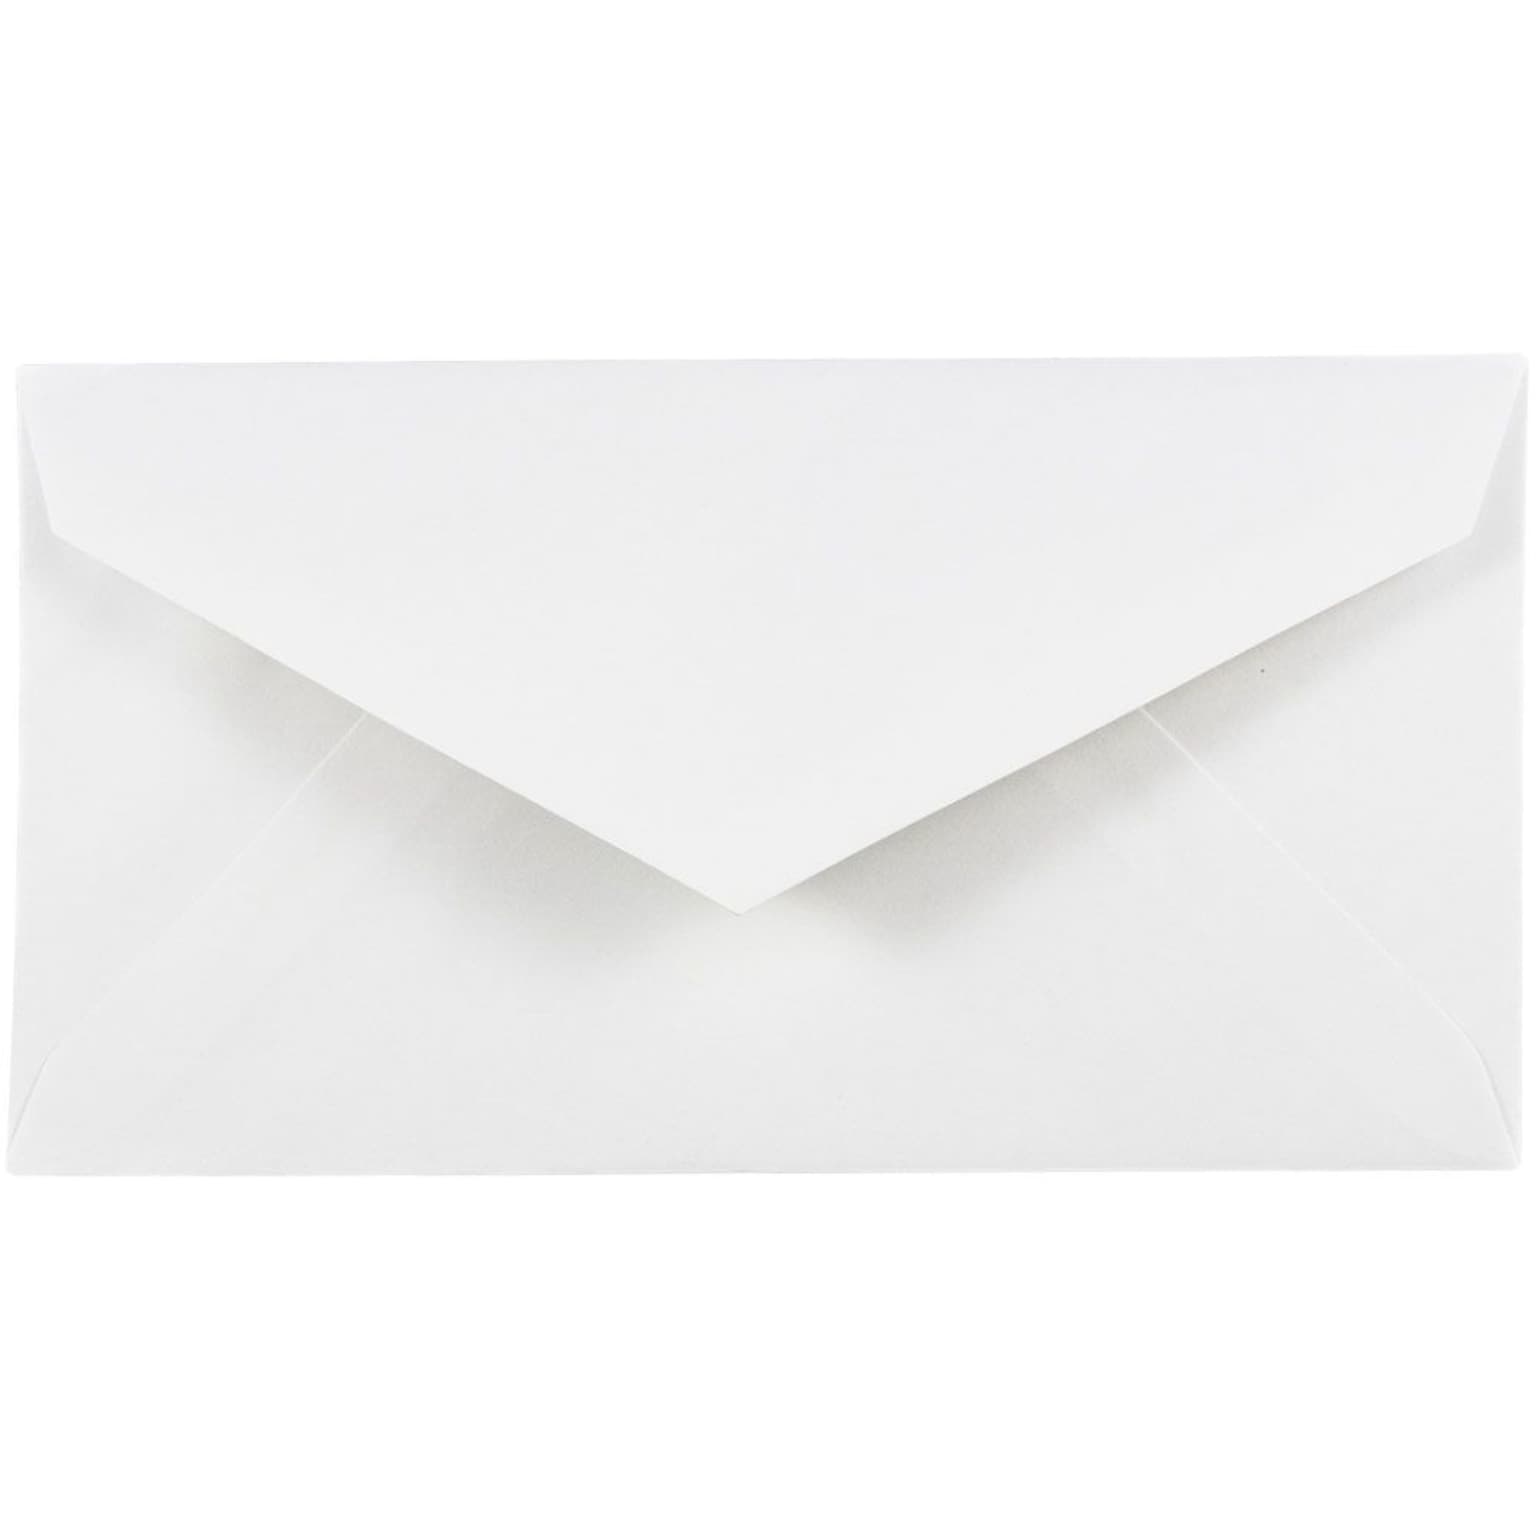 JAM Paper Business Envelope, 3 7/8 x 7 1/2, White, 500/Box (1633984C)